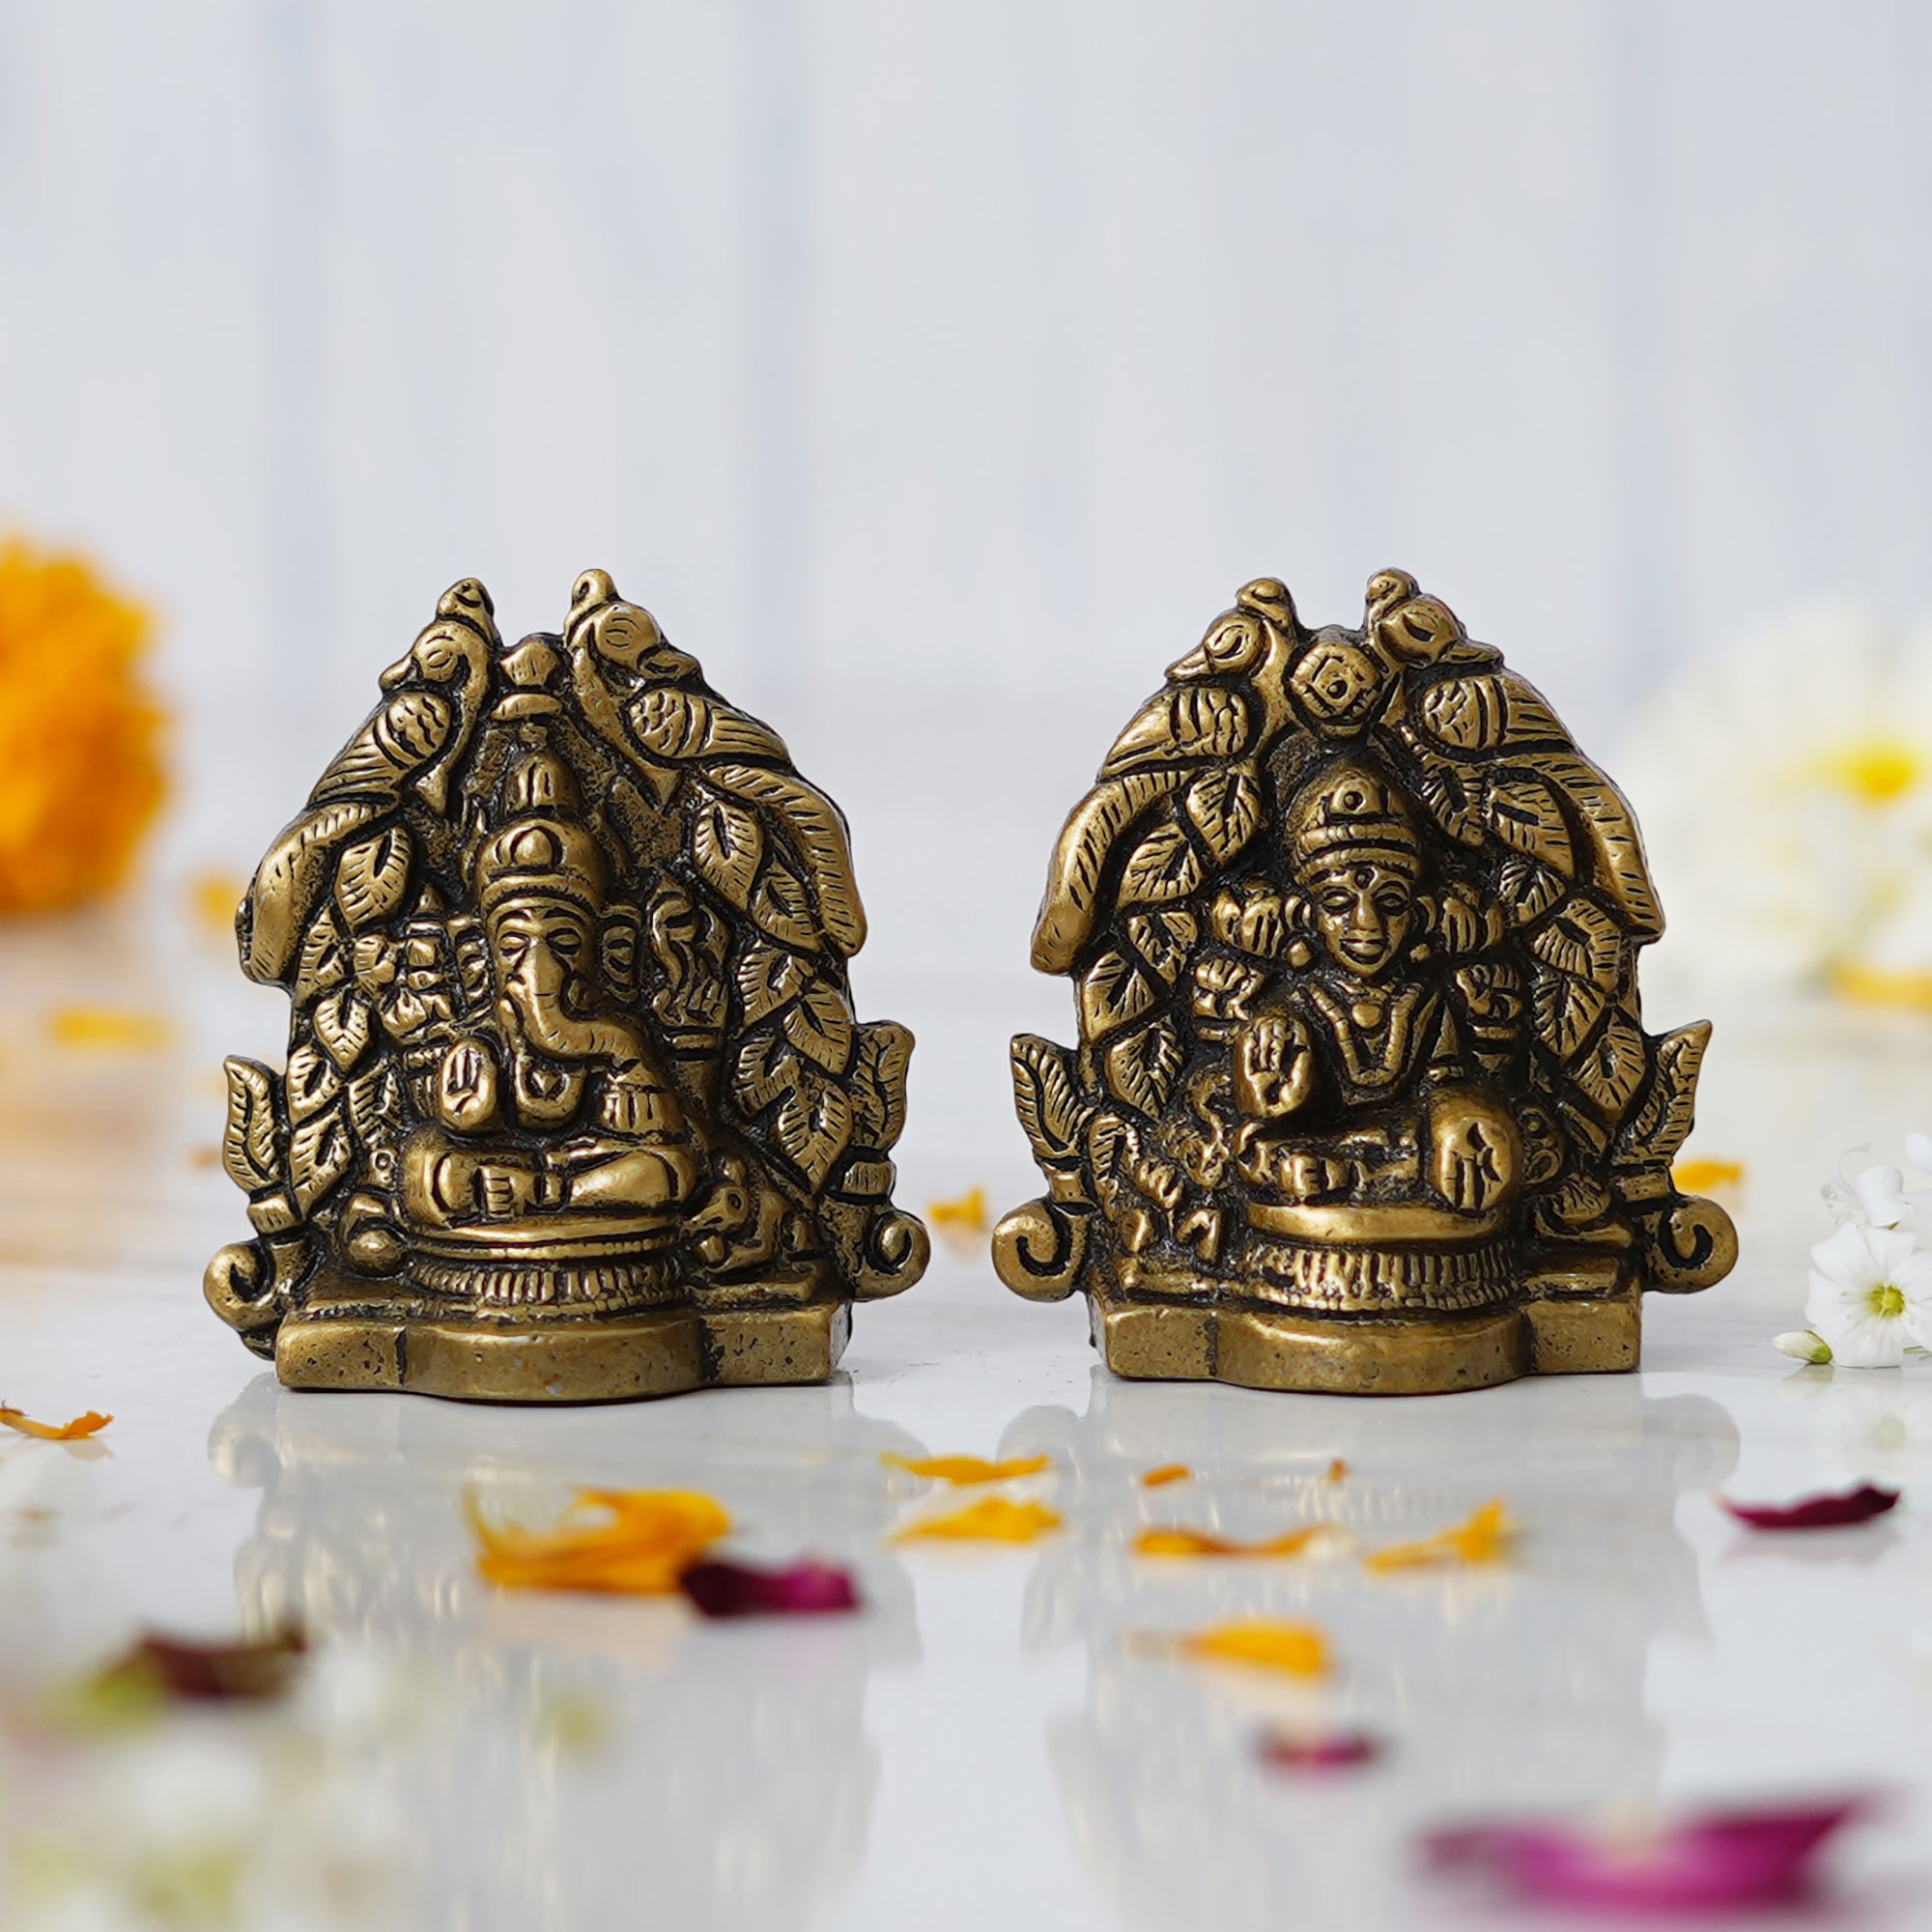 eCraftIndia The Godly Gift Box - Brass Handcrafted Goddess Lakshmi and Lord Ganesha Idols, Set of 2 Metal Handcrafted Golden Lotus Flower Shape Decorative Diyas 5